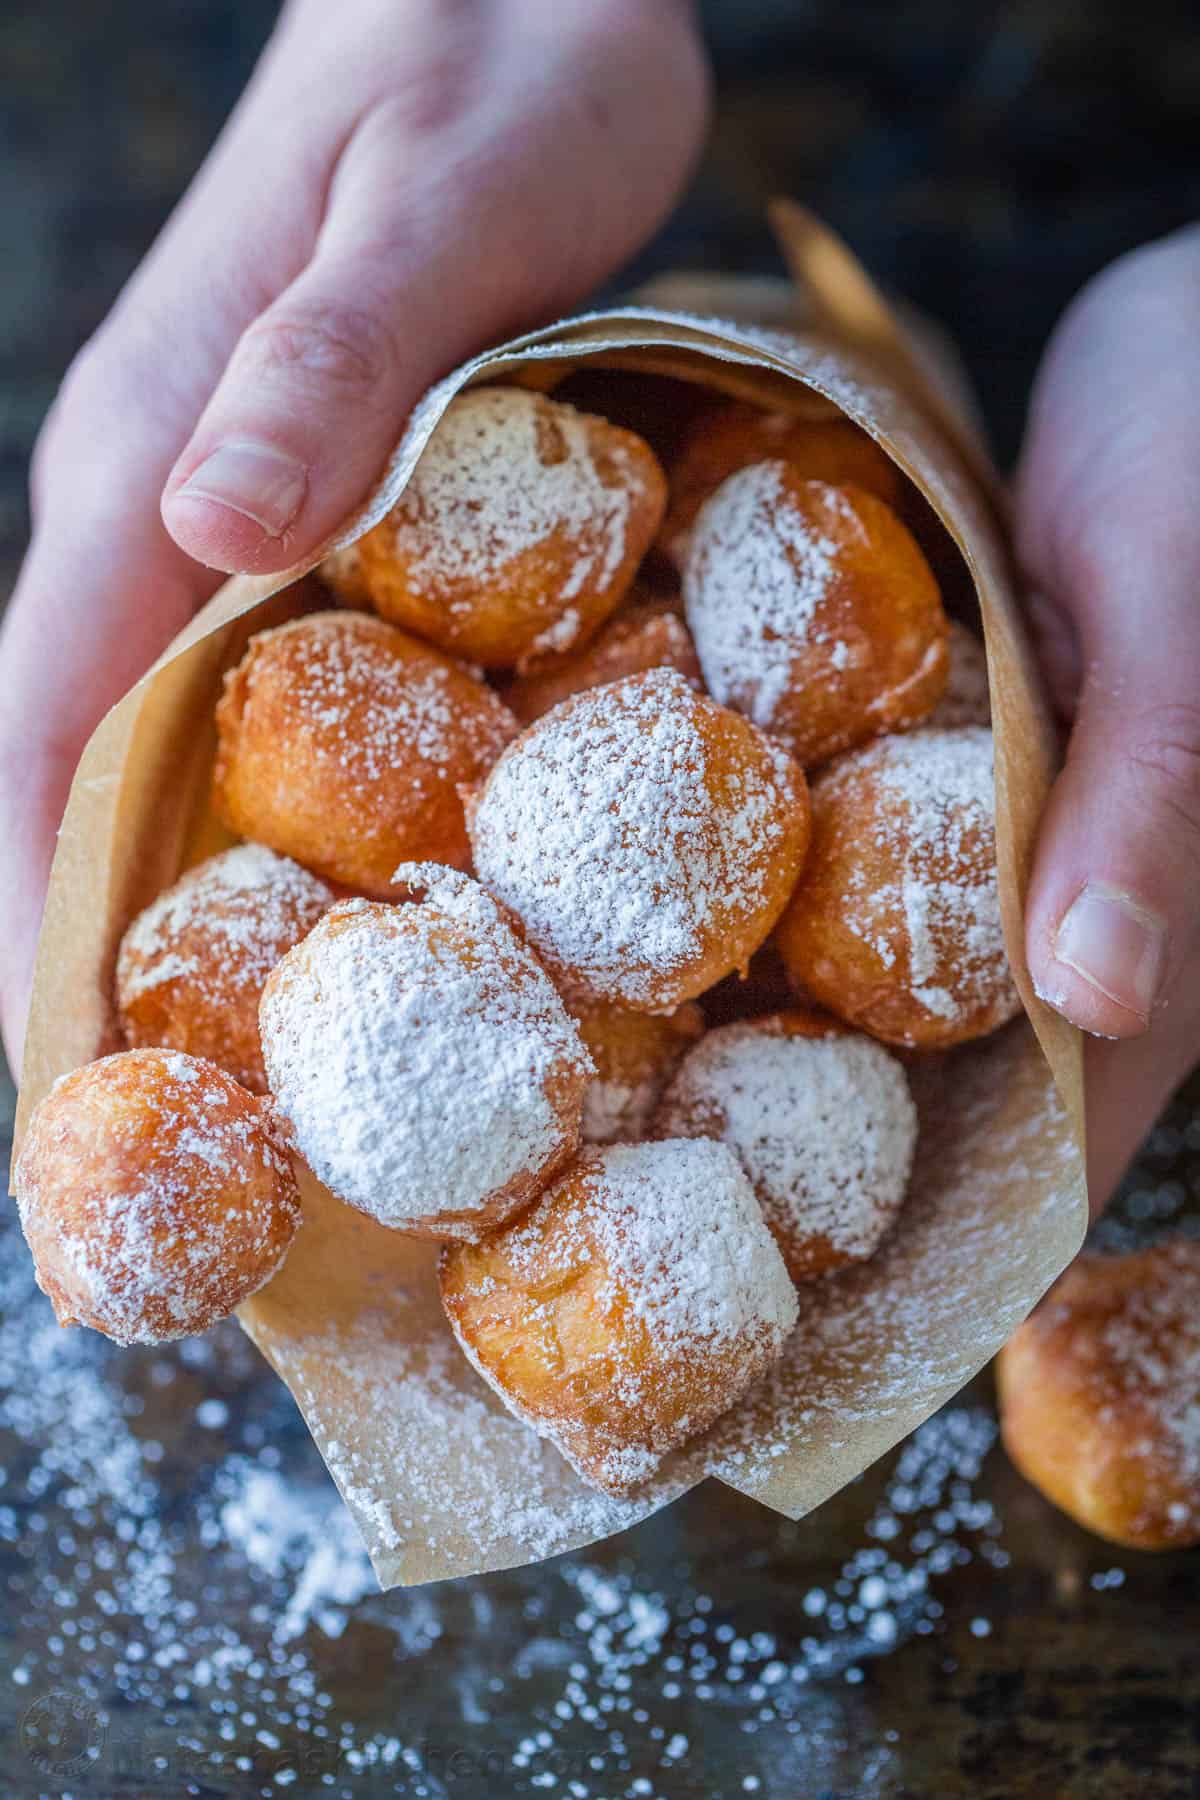 Zeppole Recipe (Easy Italian Donuts) from https://natashaskitchen.com/